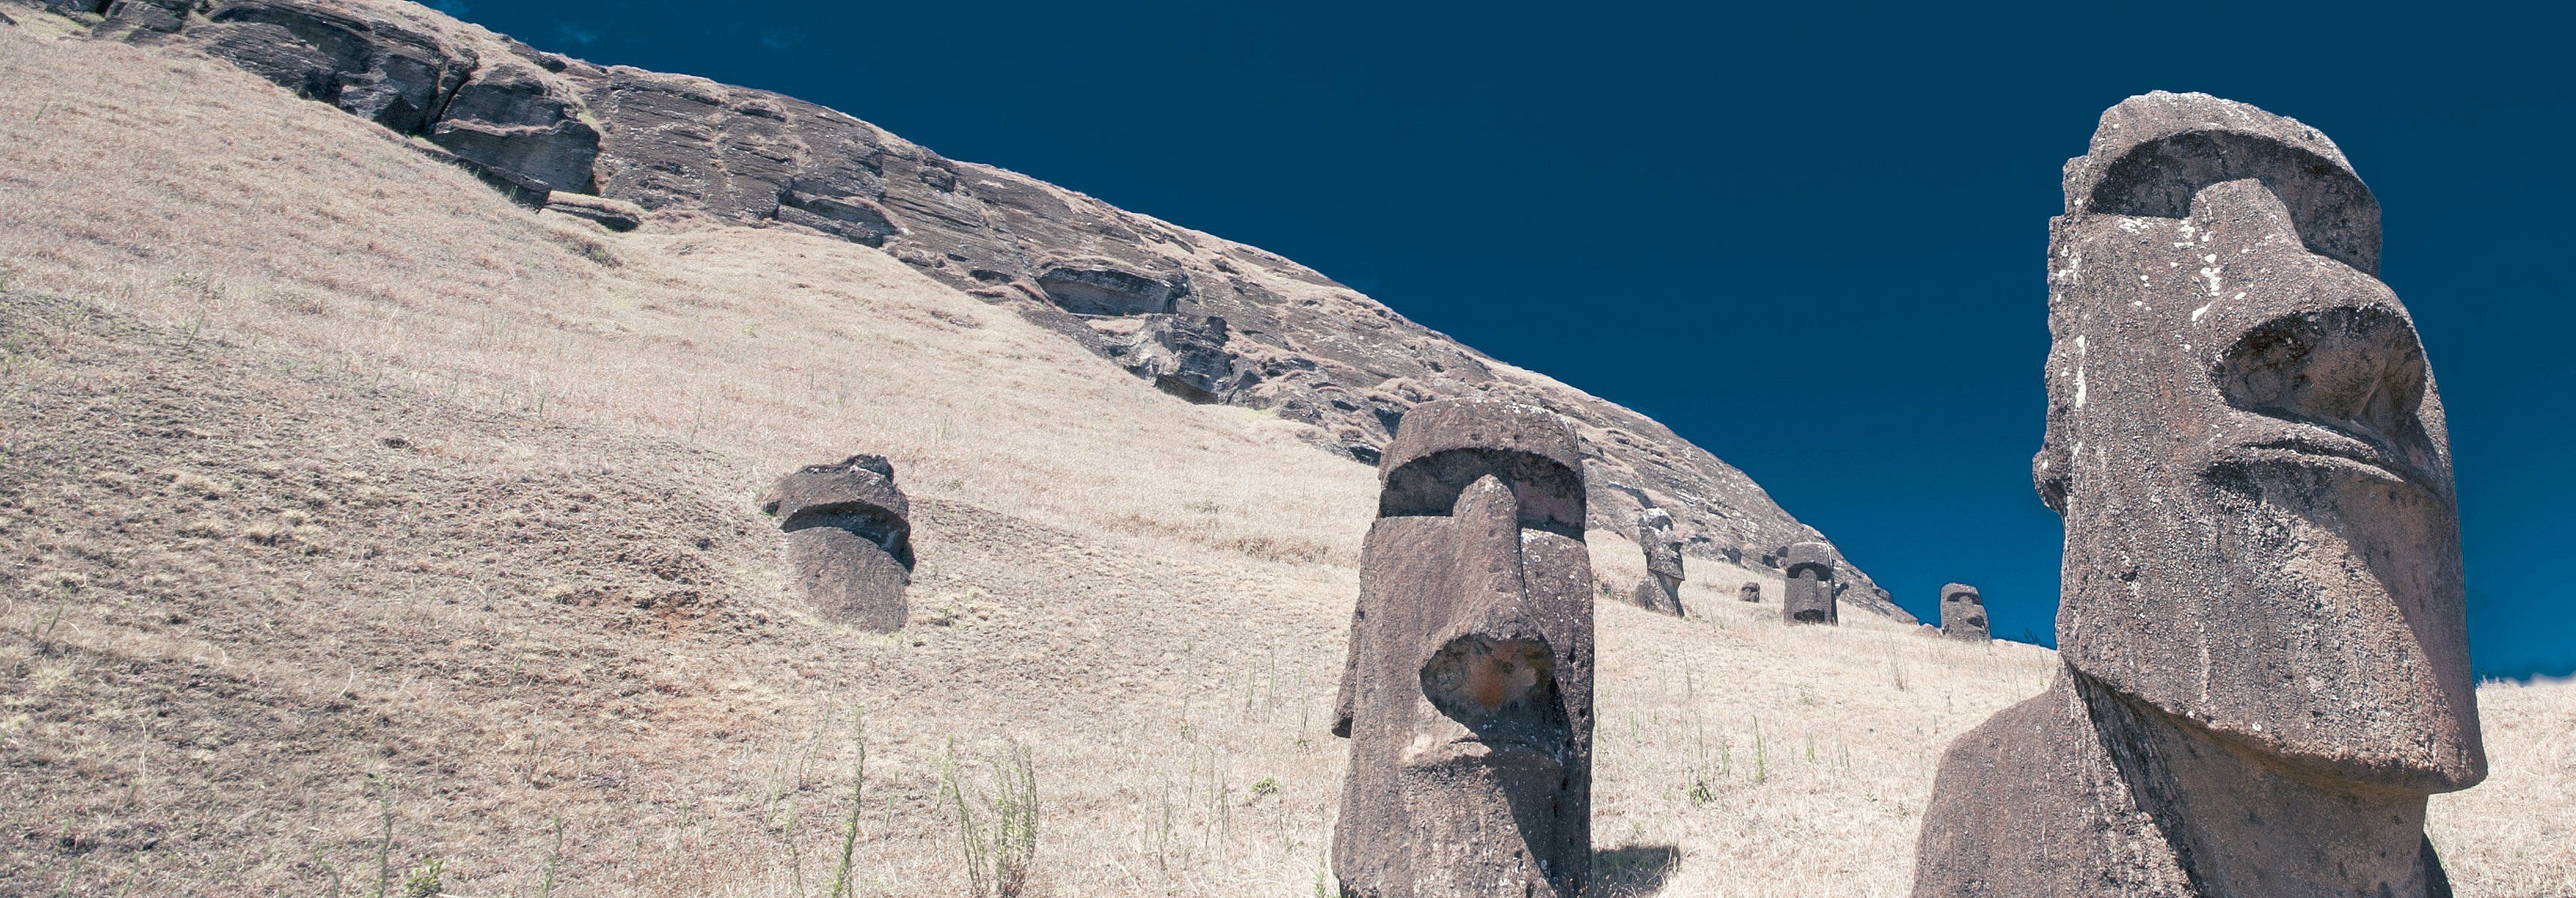 Moai heads on Easter Island, and island off Chile